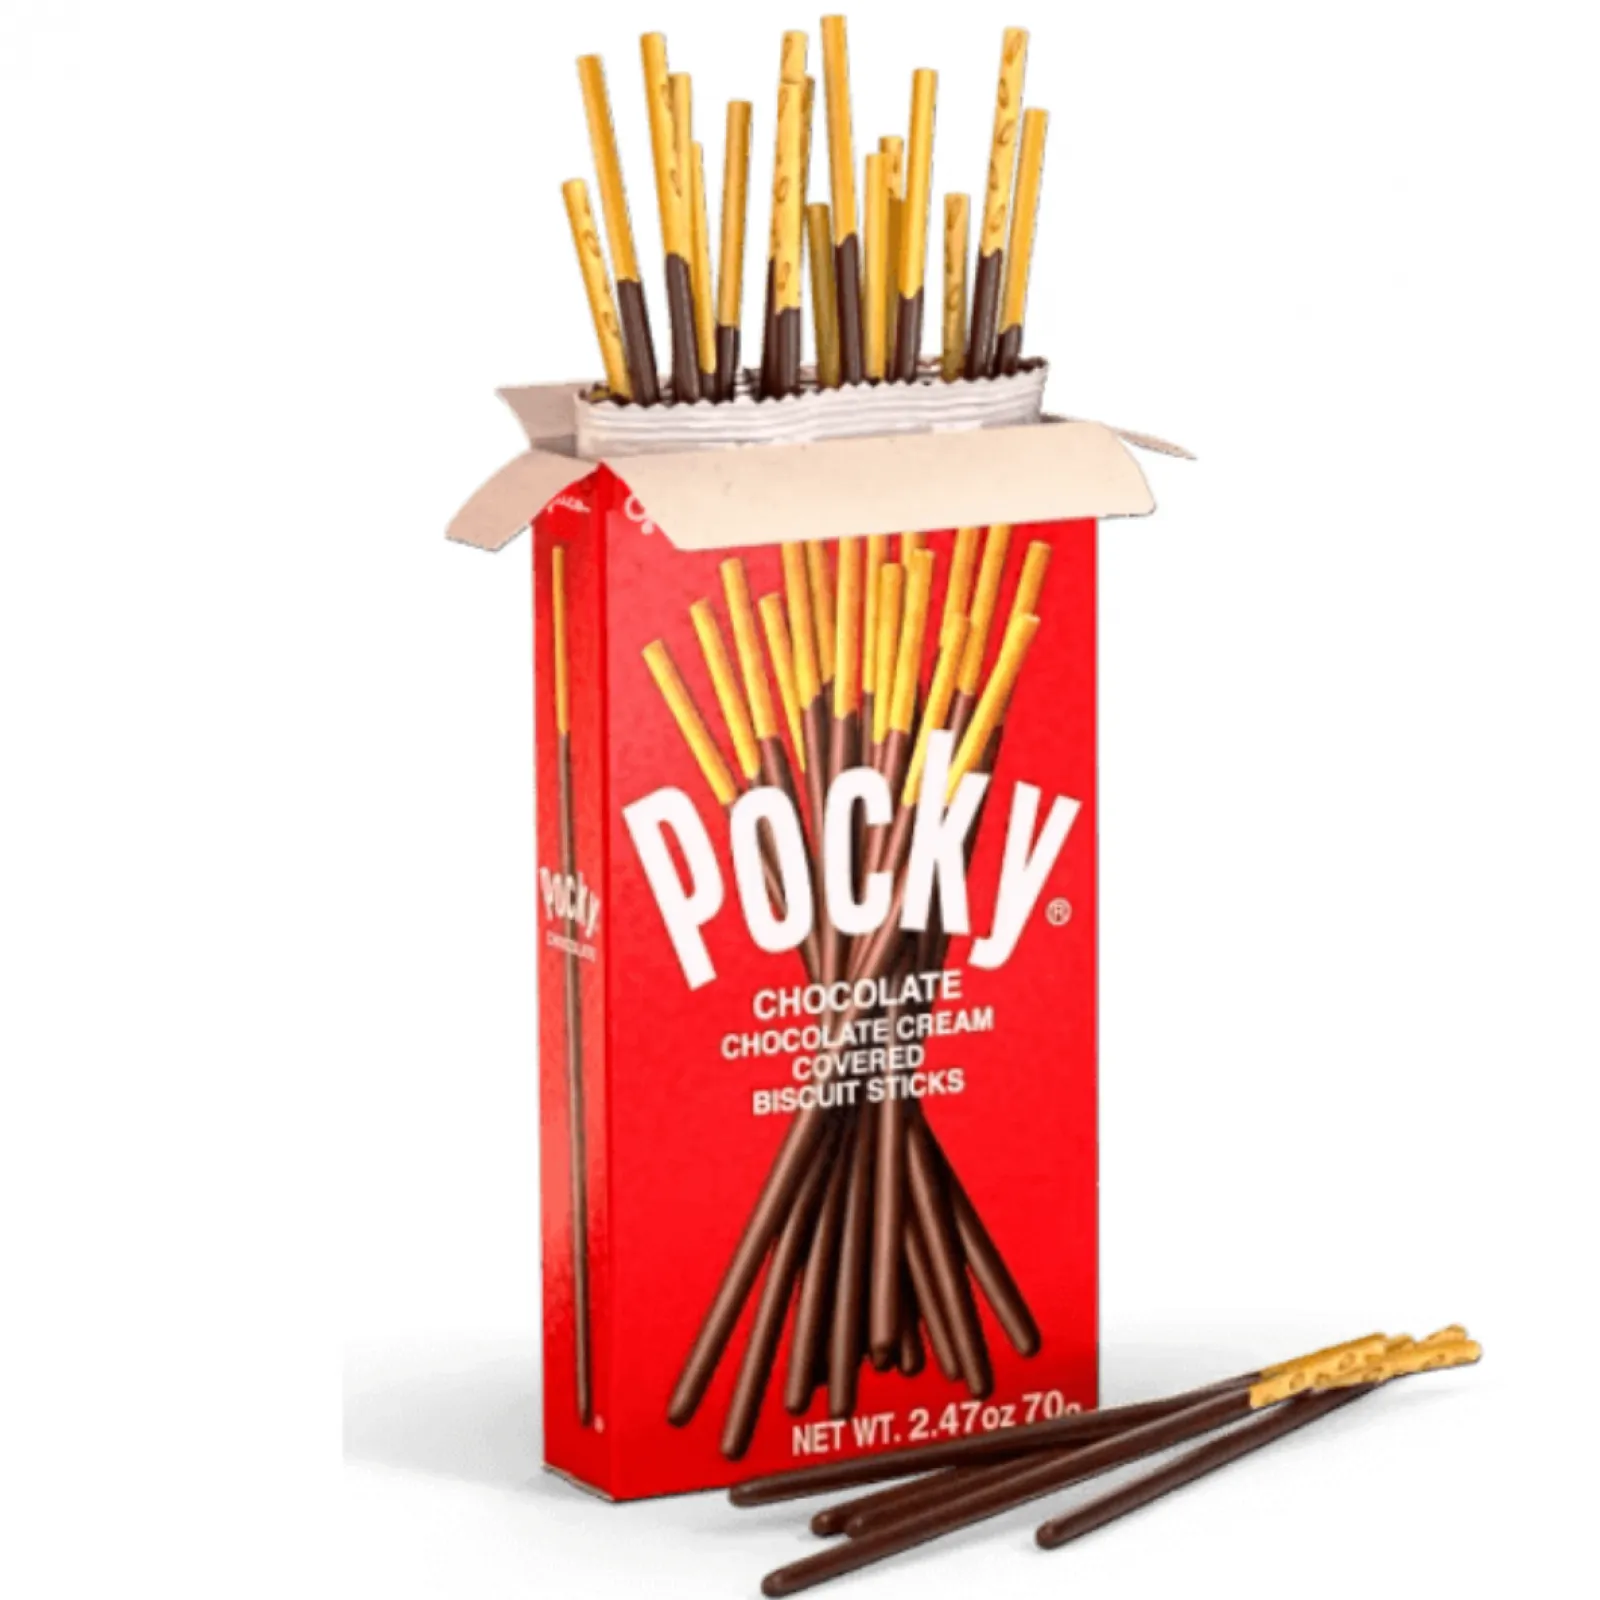 Pocky Chocolate Sticks 49 g